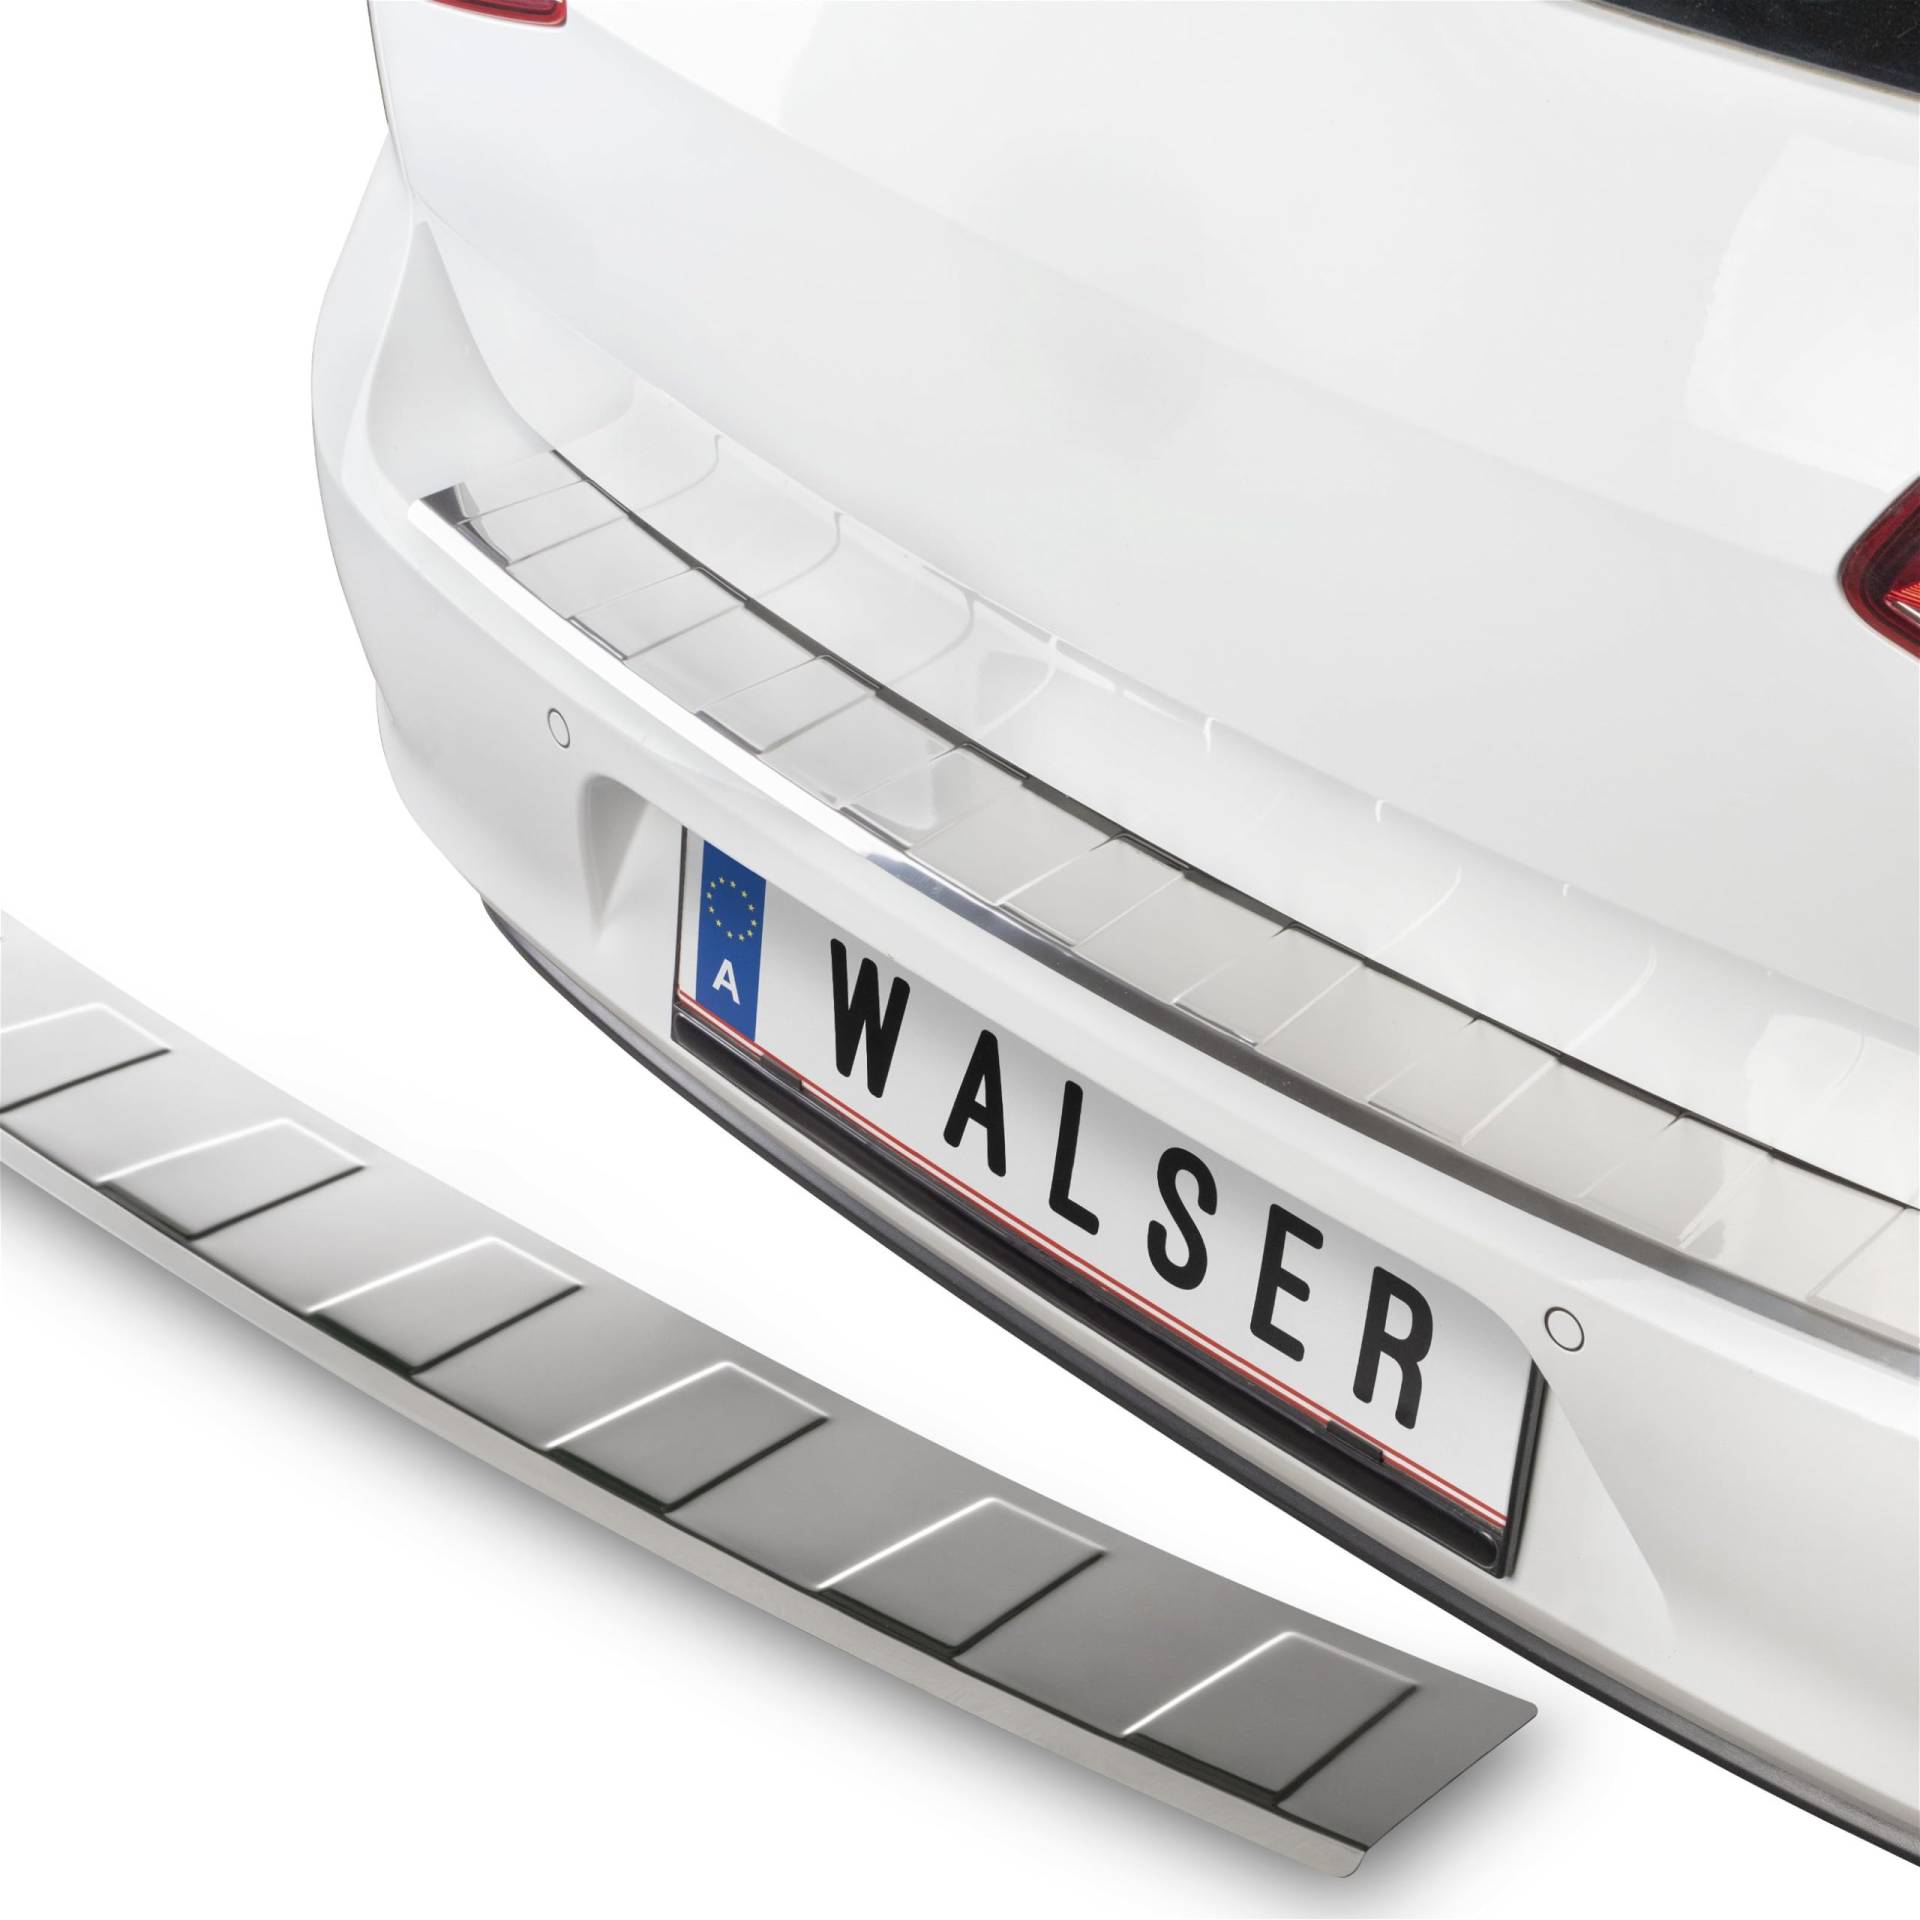 Walser Premium Ladekantenschutz kompatibel mit VW Up 2016-Heute, 5-Türer, 100% maßgeschneiderter Kantenschutz Edelstahl Proguard, Kofferraum Stoßstangenschutz Auto Made in Europa Silber von Walser